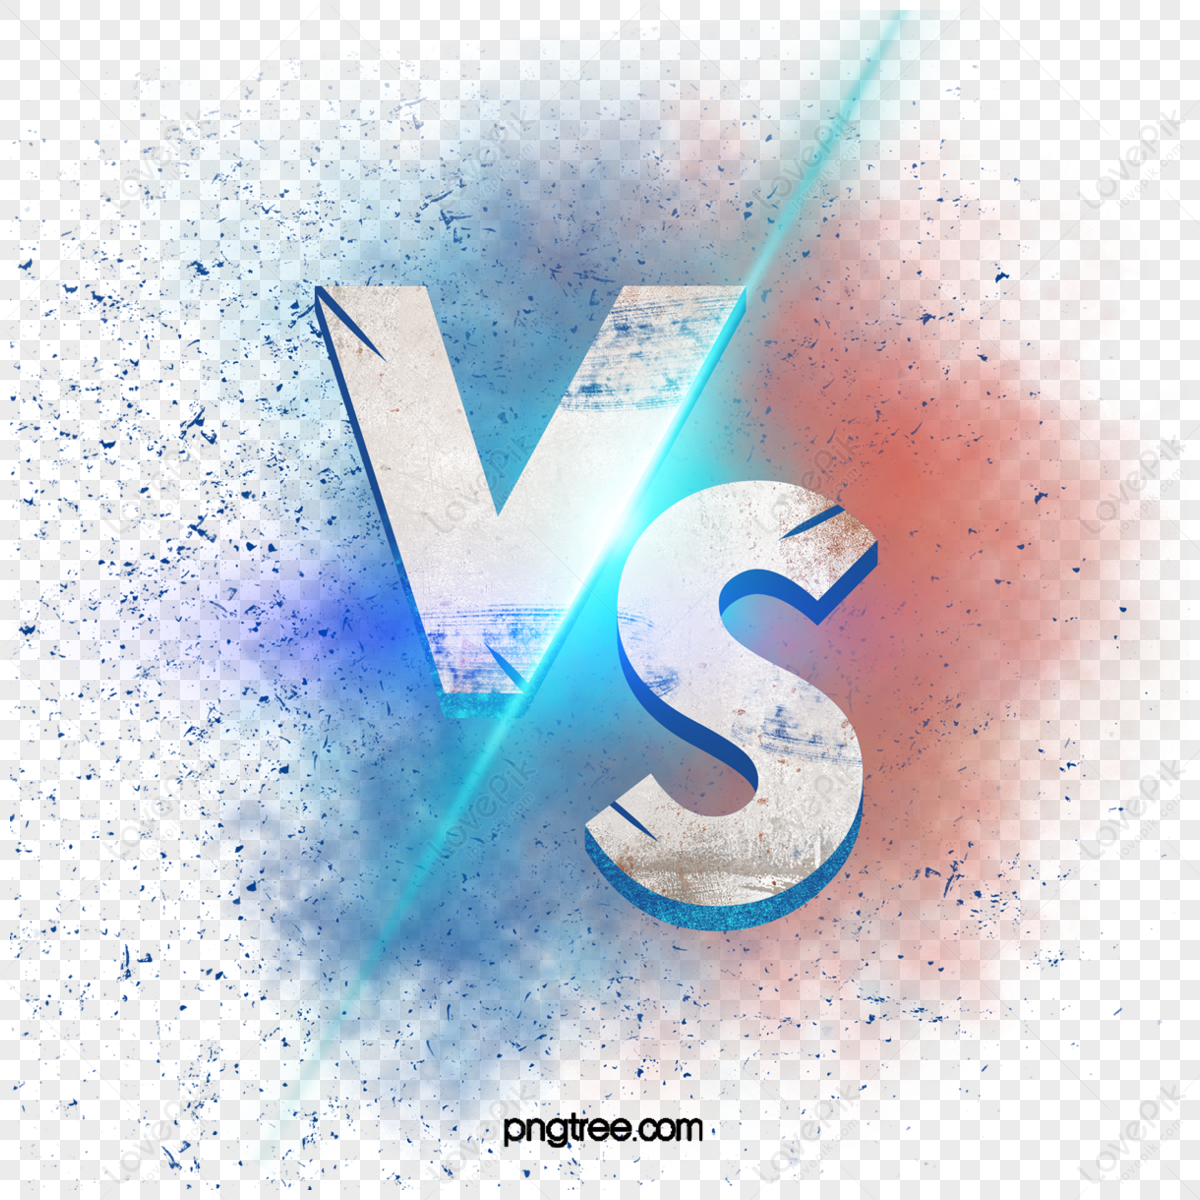 Versus Clipart Transparent Background, Versus Vs Transparent Background For  Battle, Line, Color, Letter PNG Image For Free Download